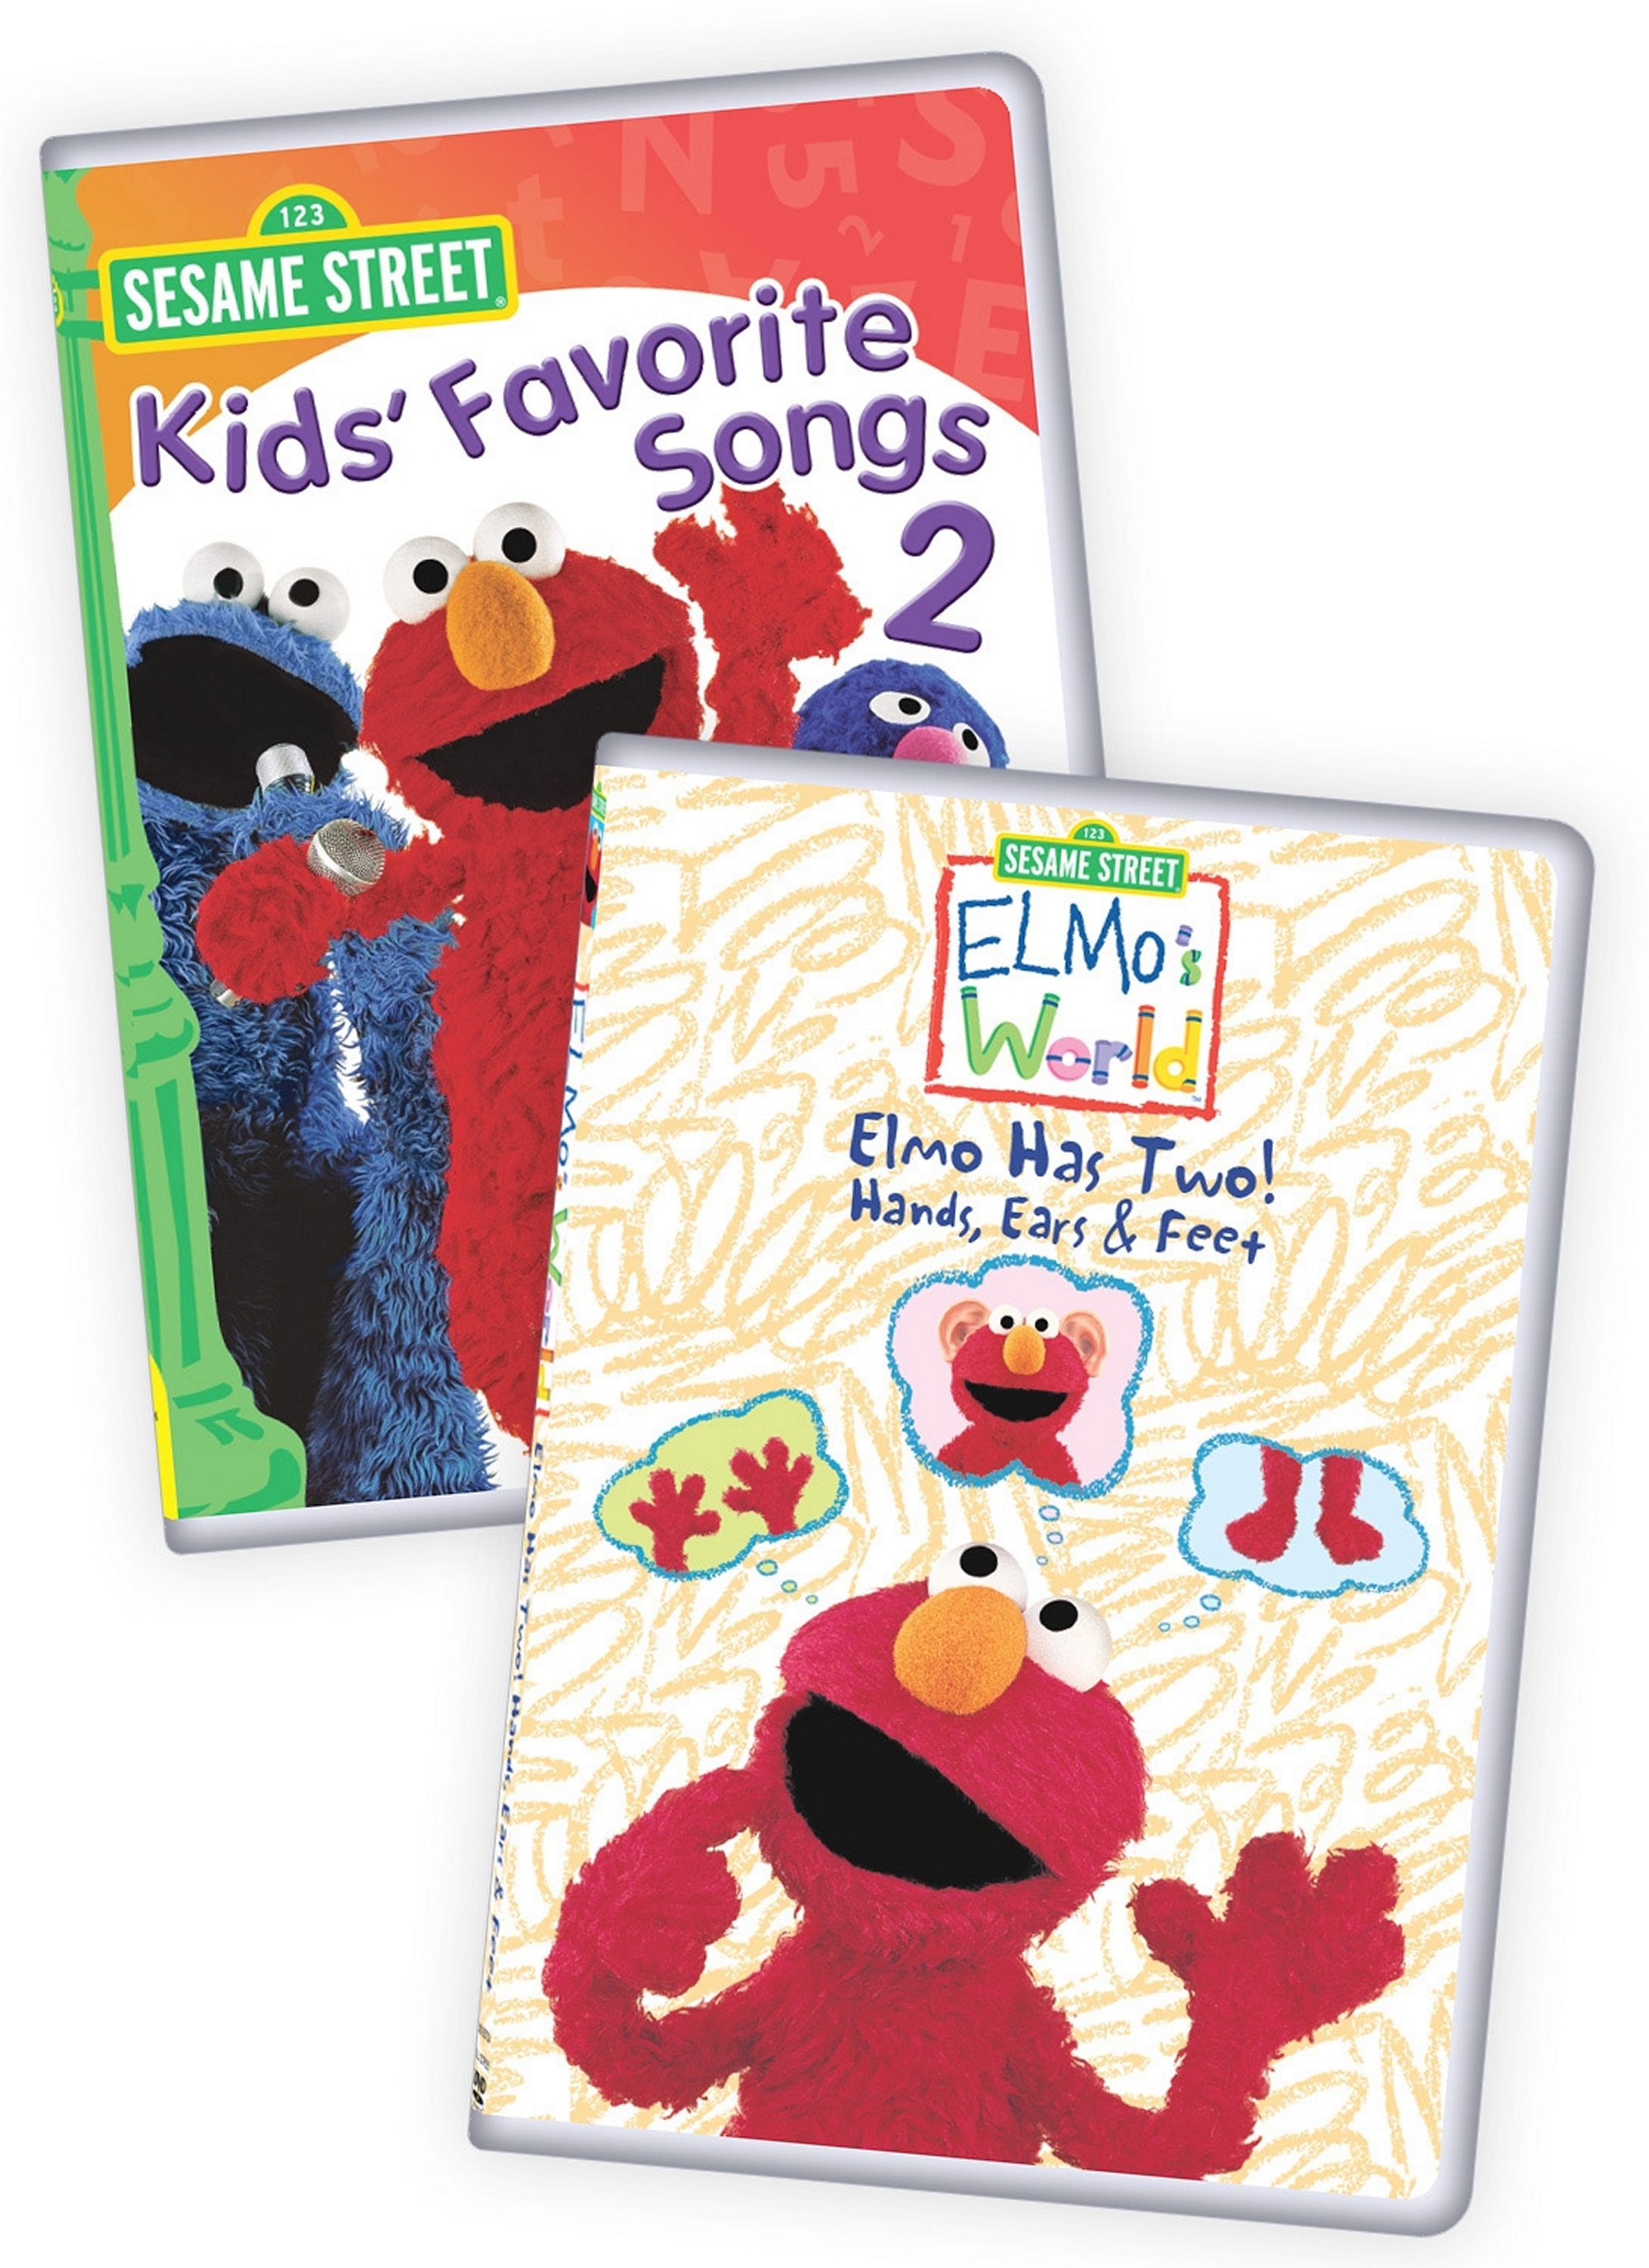 Elmos World Elmo Has Two Hands Ears Feetkids Favorite Songs 2 Dvd - elmos.....